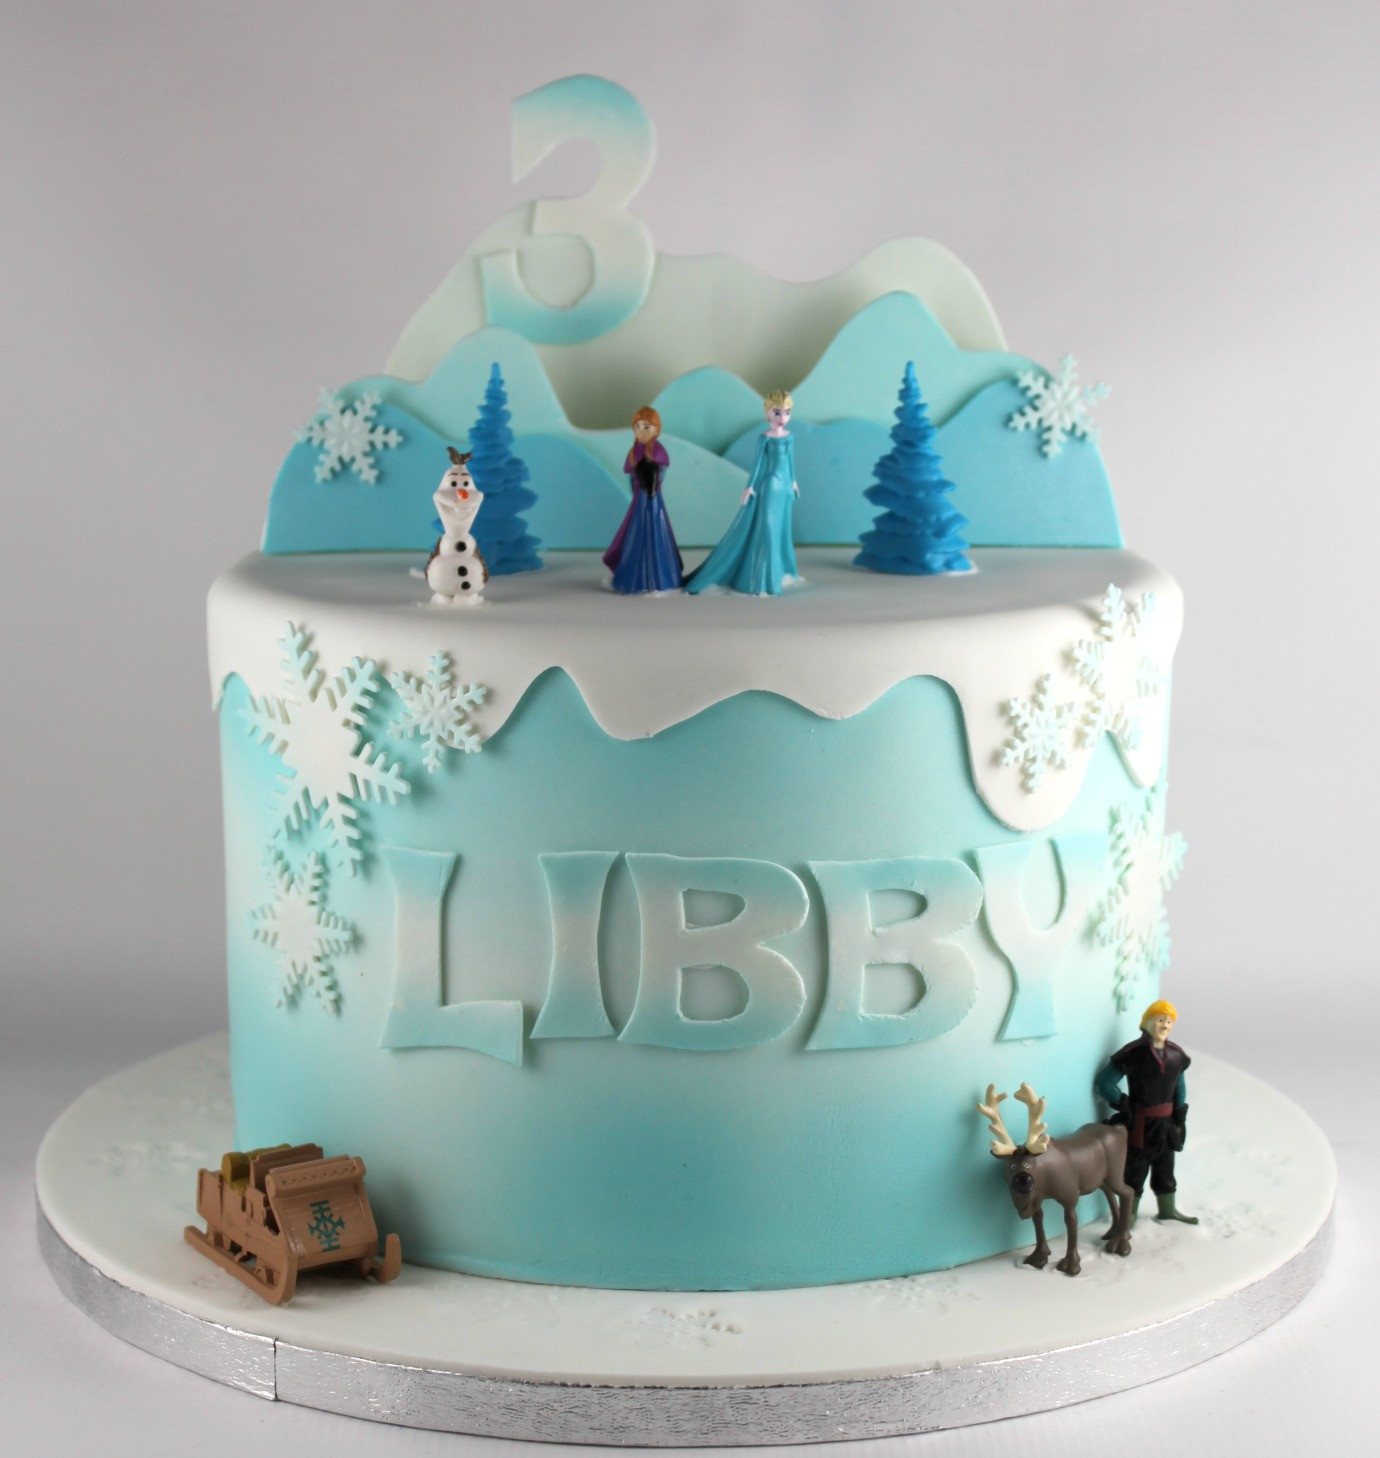 Best ideas about Frozen Birthday Cake
. Save or Pin Frozen Birthday Cake Now.